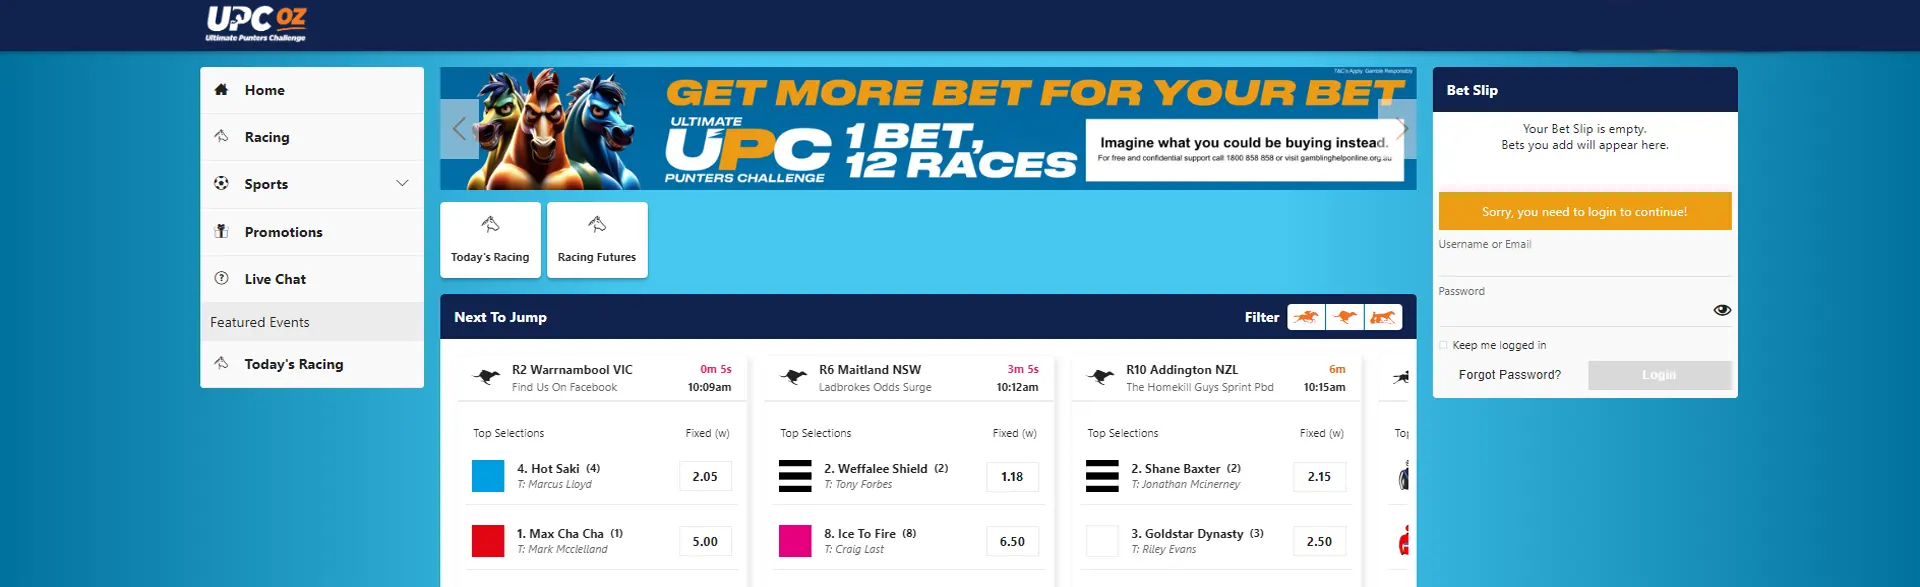 Homepage displaying racing and sports betting options UPCoz.